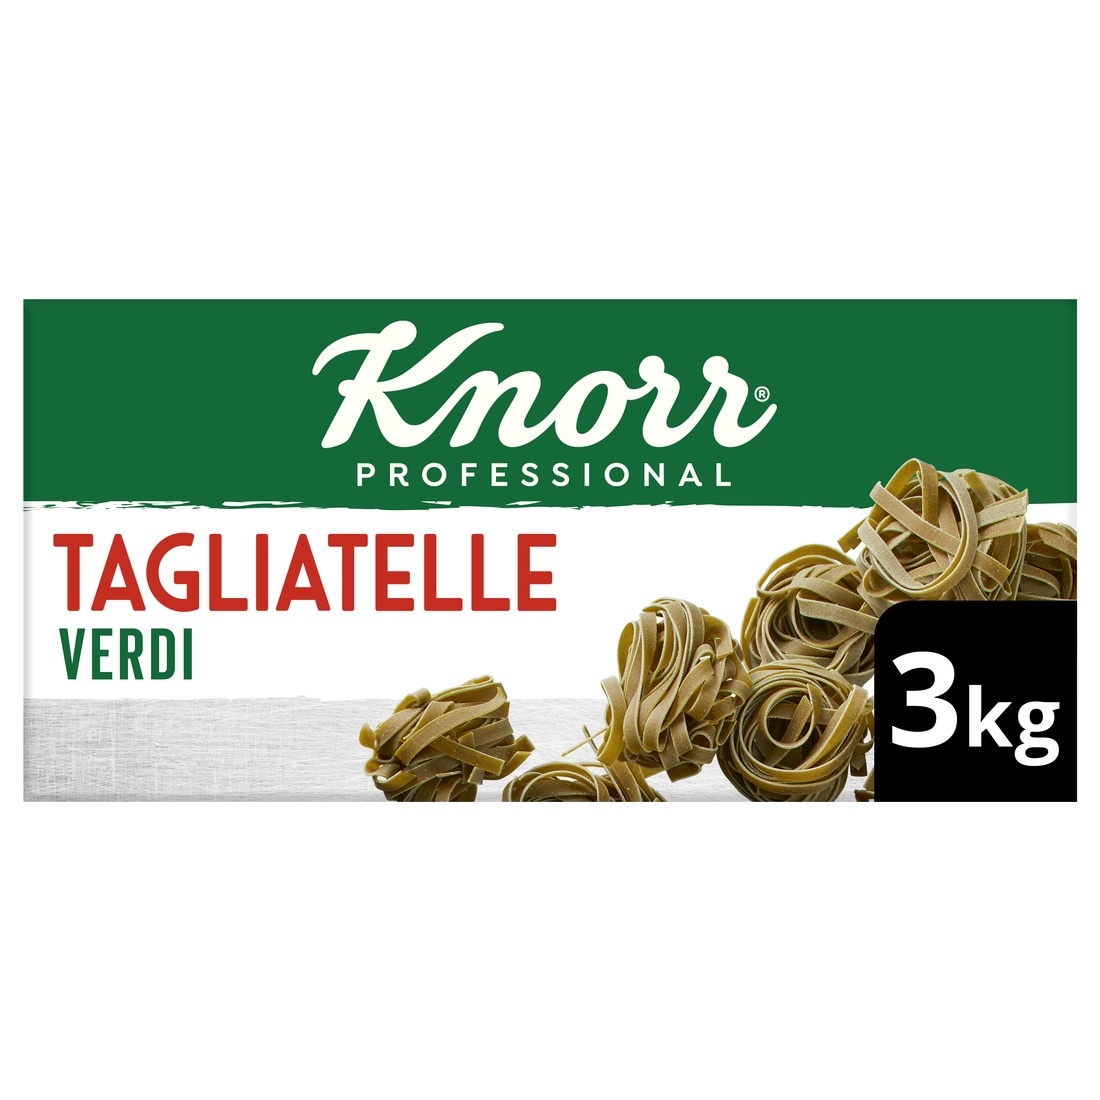 Knorr Professional Italiana Tagliatelle Verdi 3kg - 